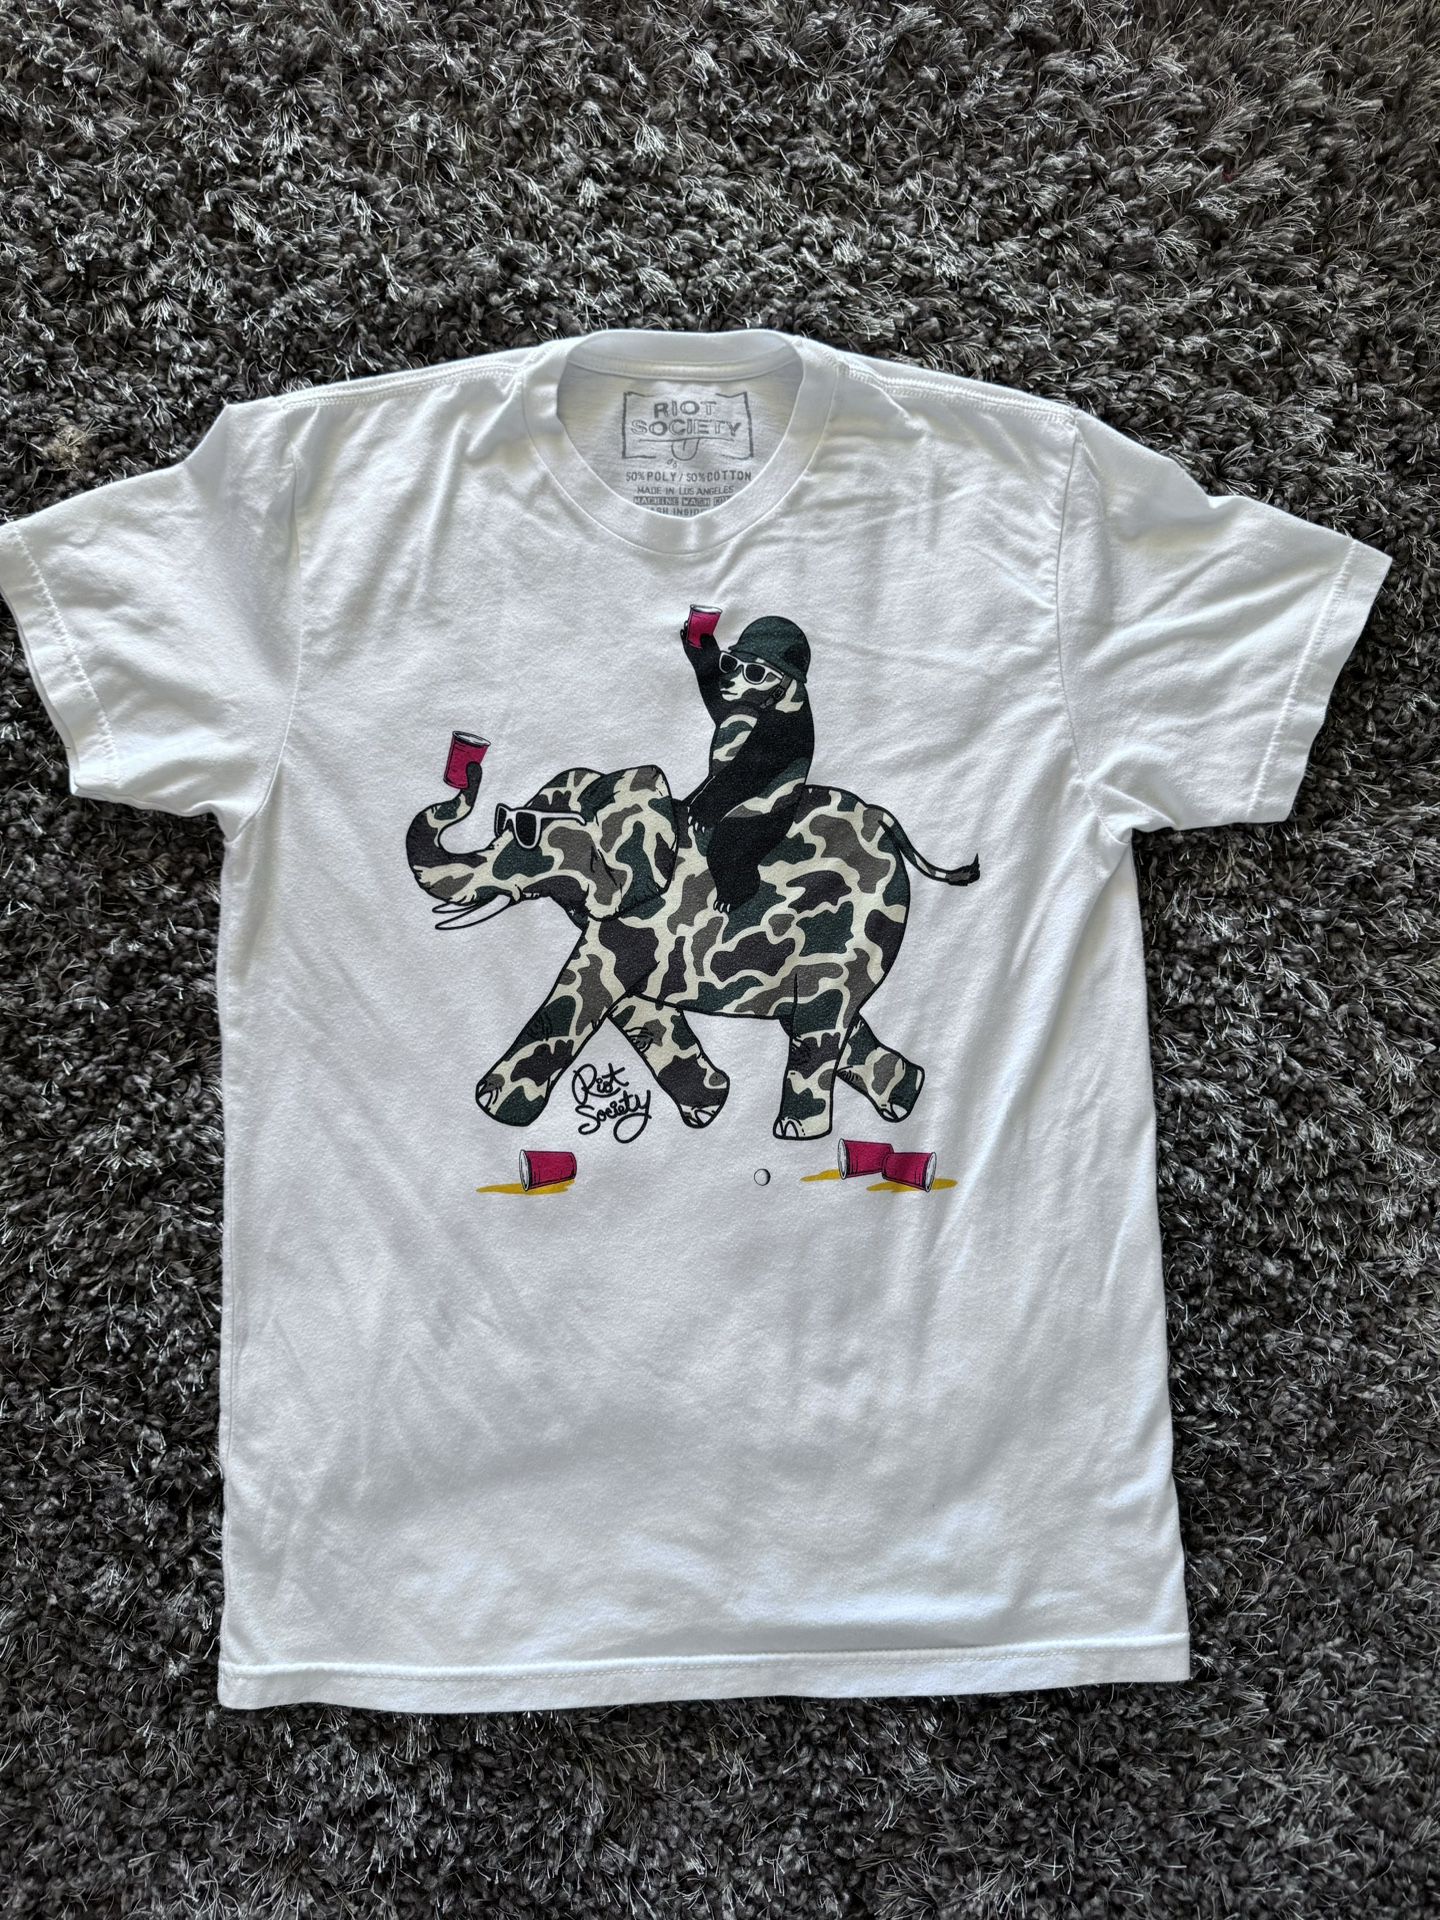 Riot Society Go Commando Camo Bear California Graphic White T-Shirt Men’s Med.